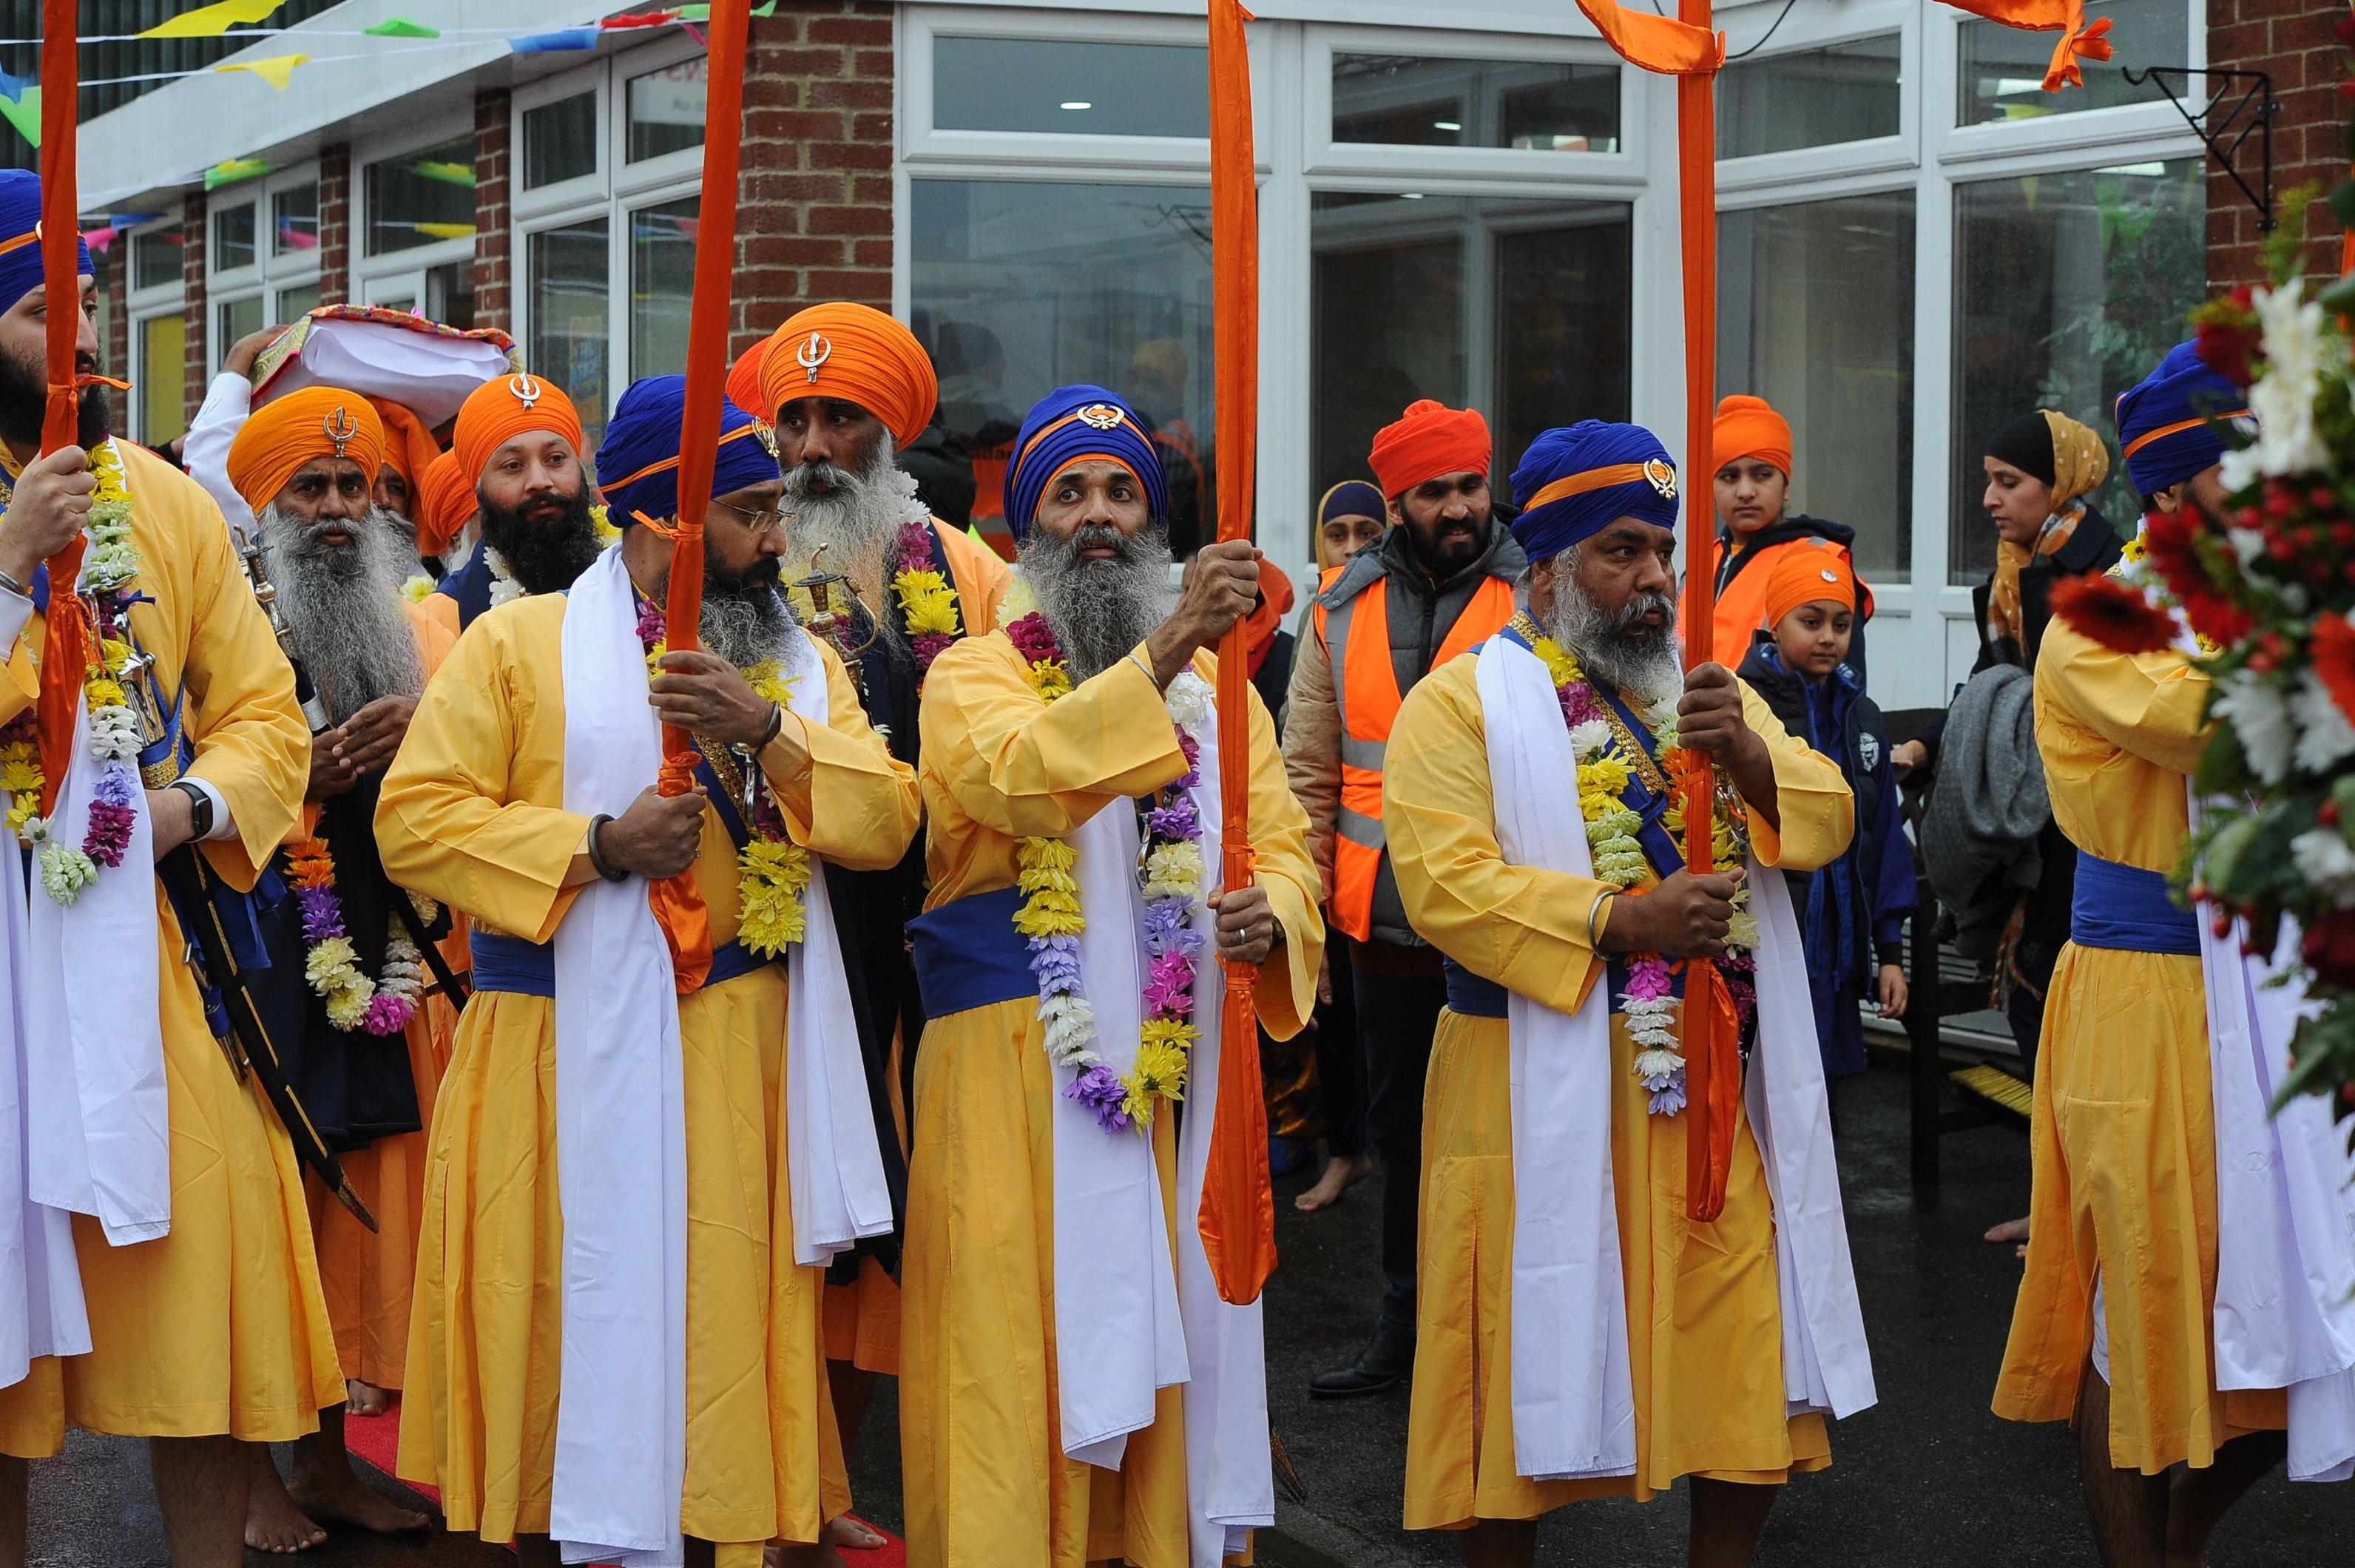 Peterborough Sikh Parade 2019 from the Gurdwara Baba Budha Sahib Temple at Royce Road to Sri Guru Singh Gurdwara Temple at Newark Road EMN-190211-213430009